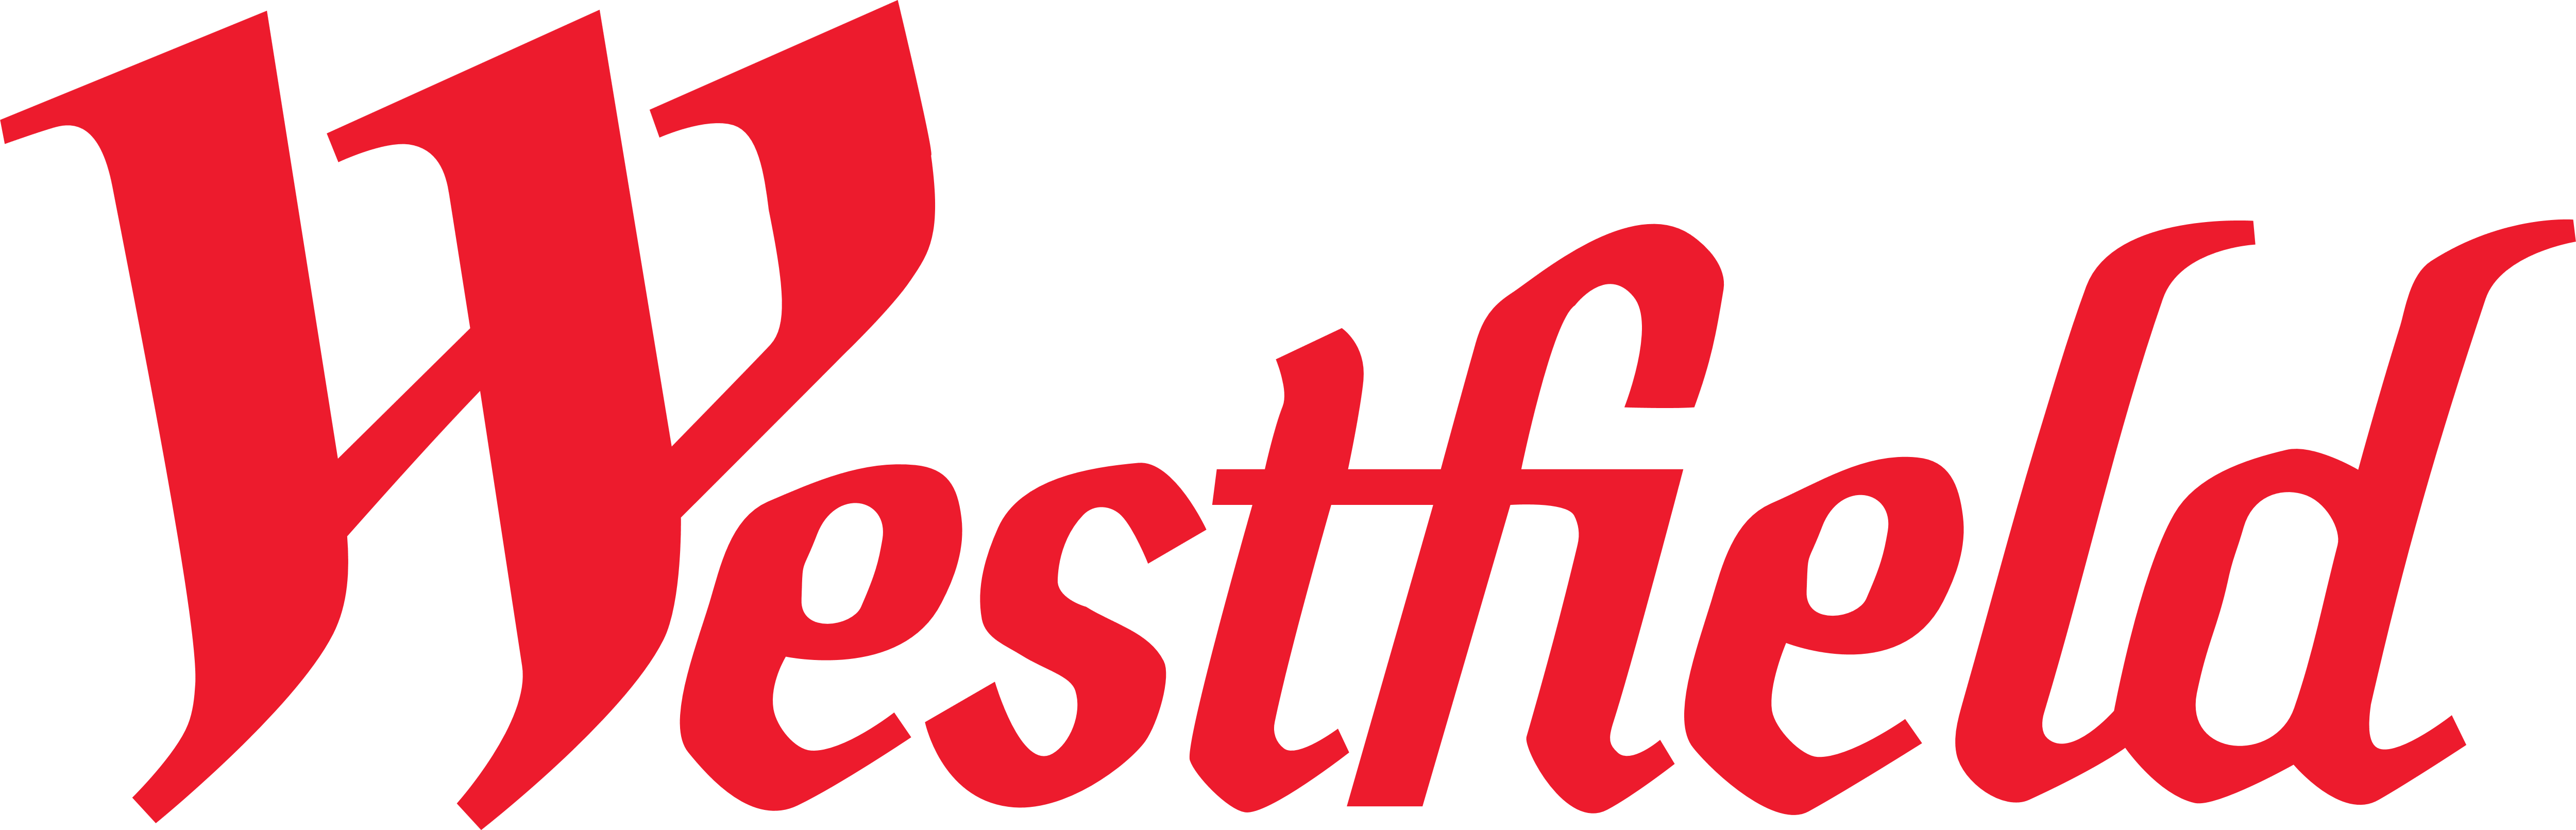 Westfield – Logos Download